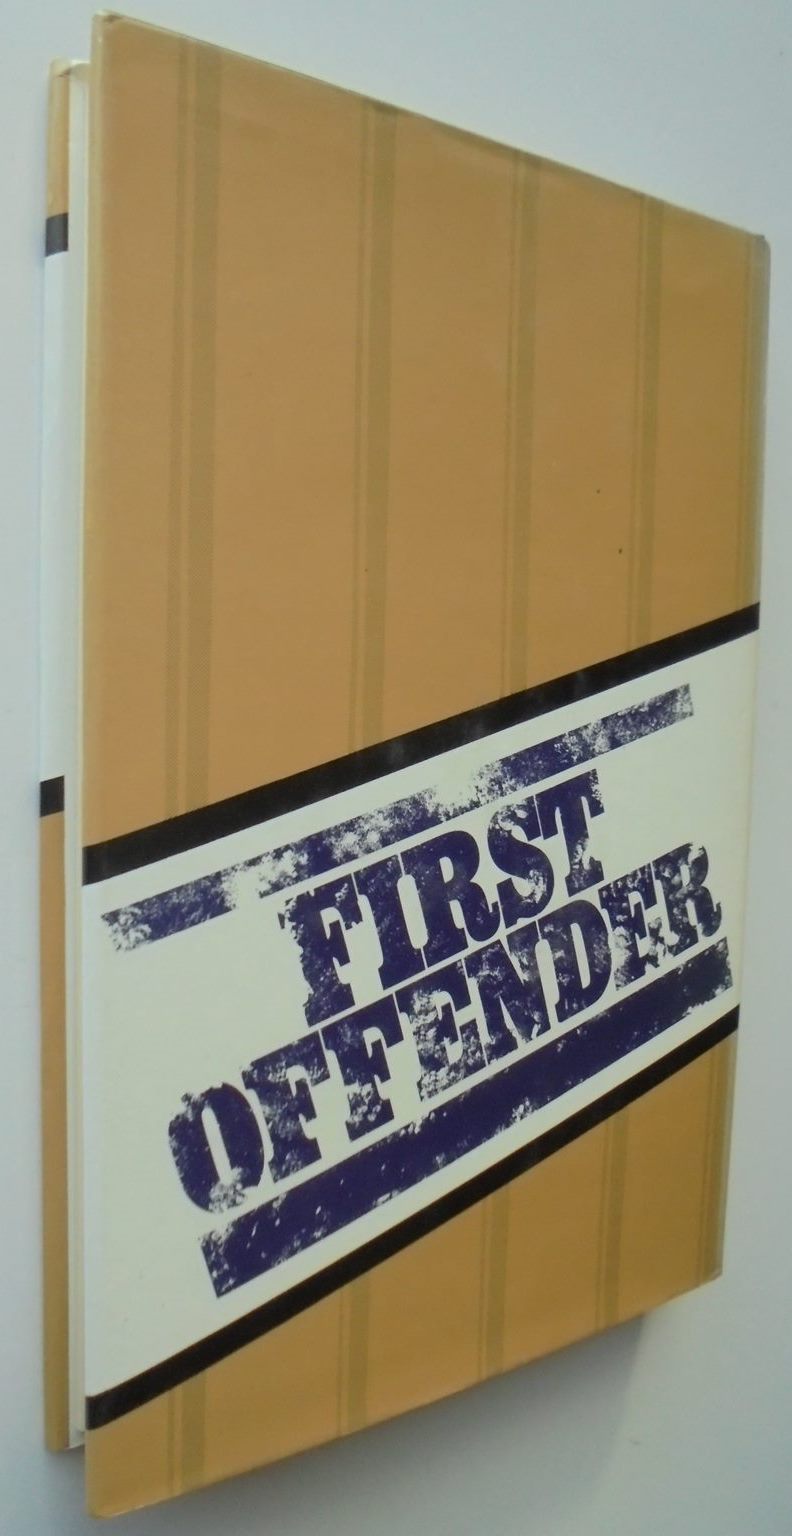 First Offender. By Ken Berry. Inside A New Zealand prison